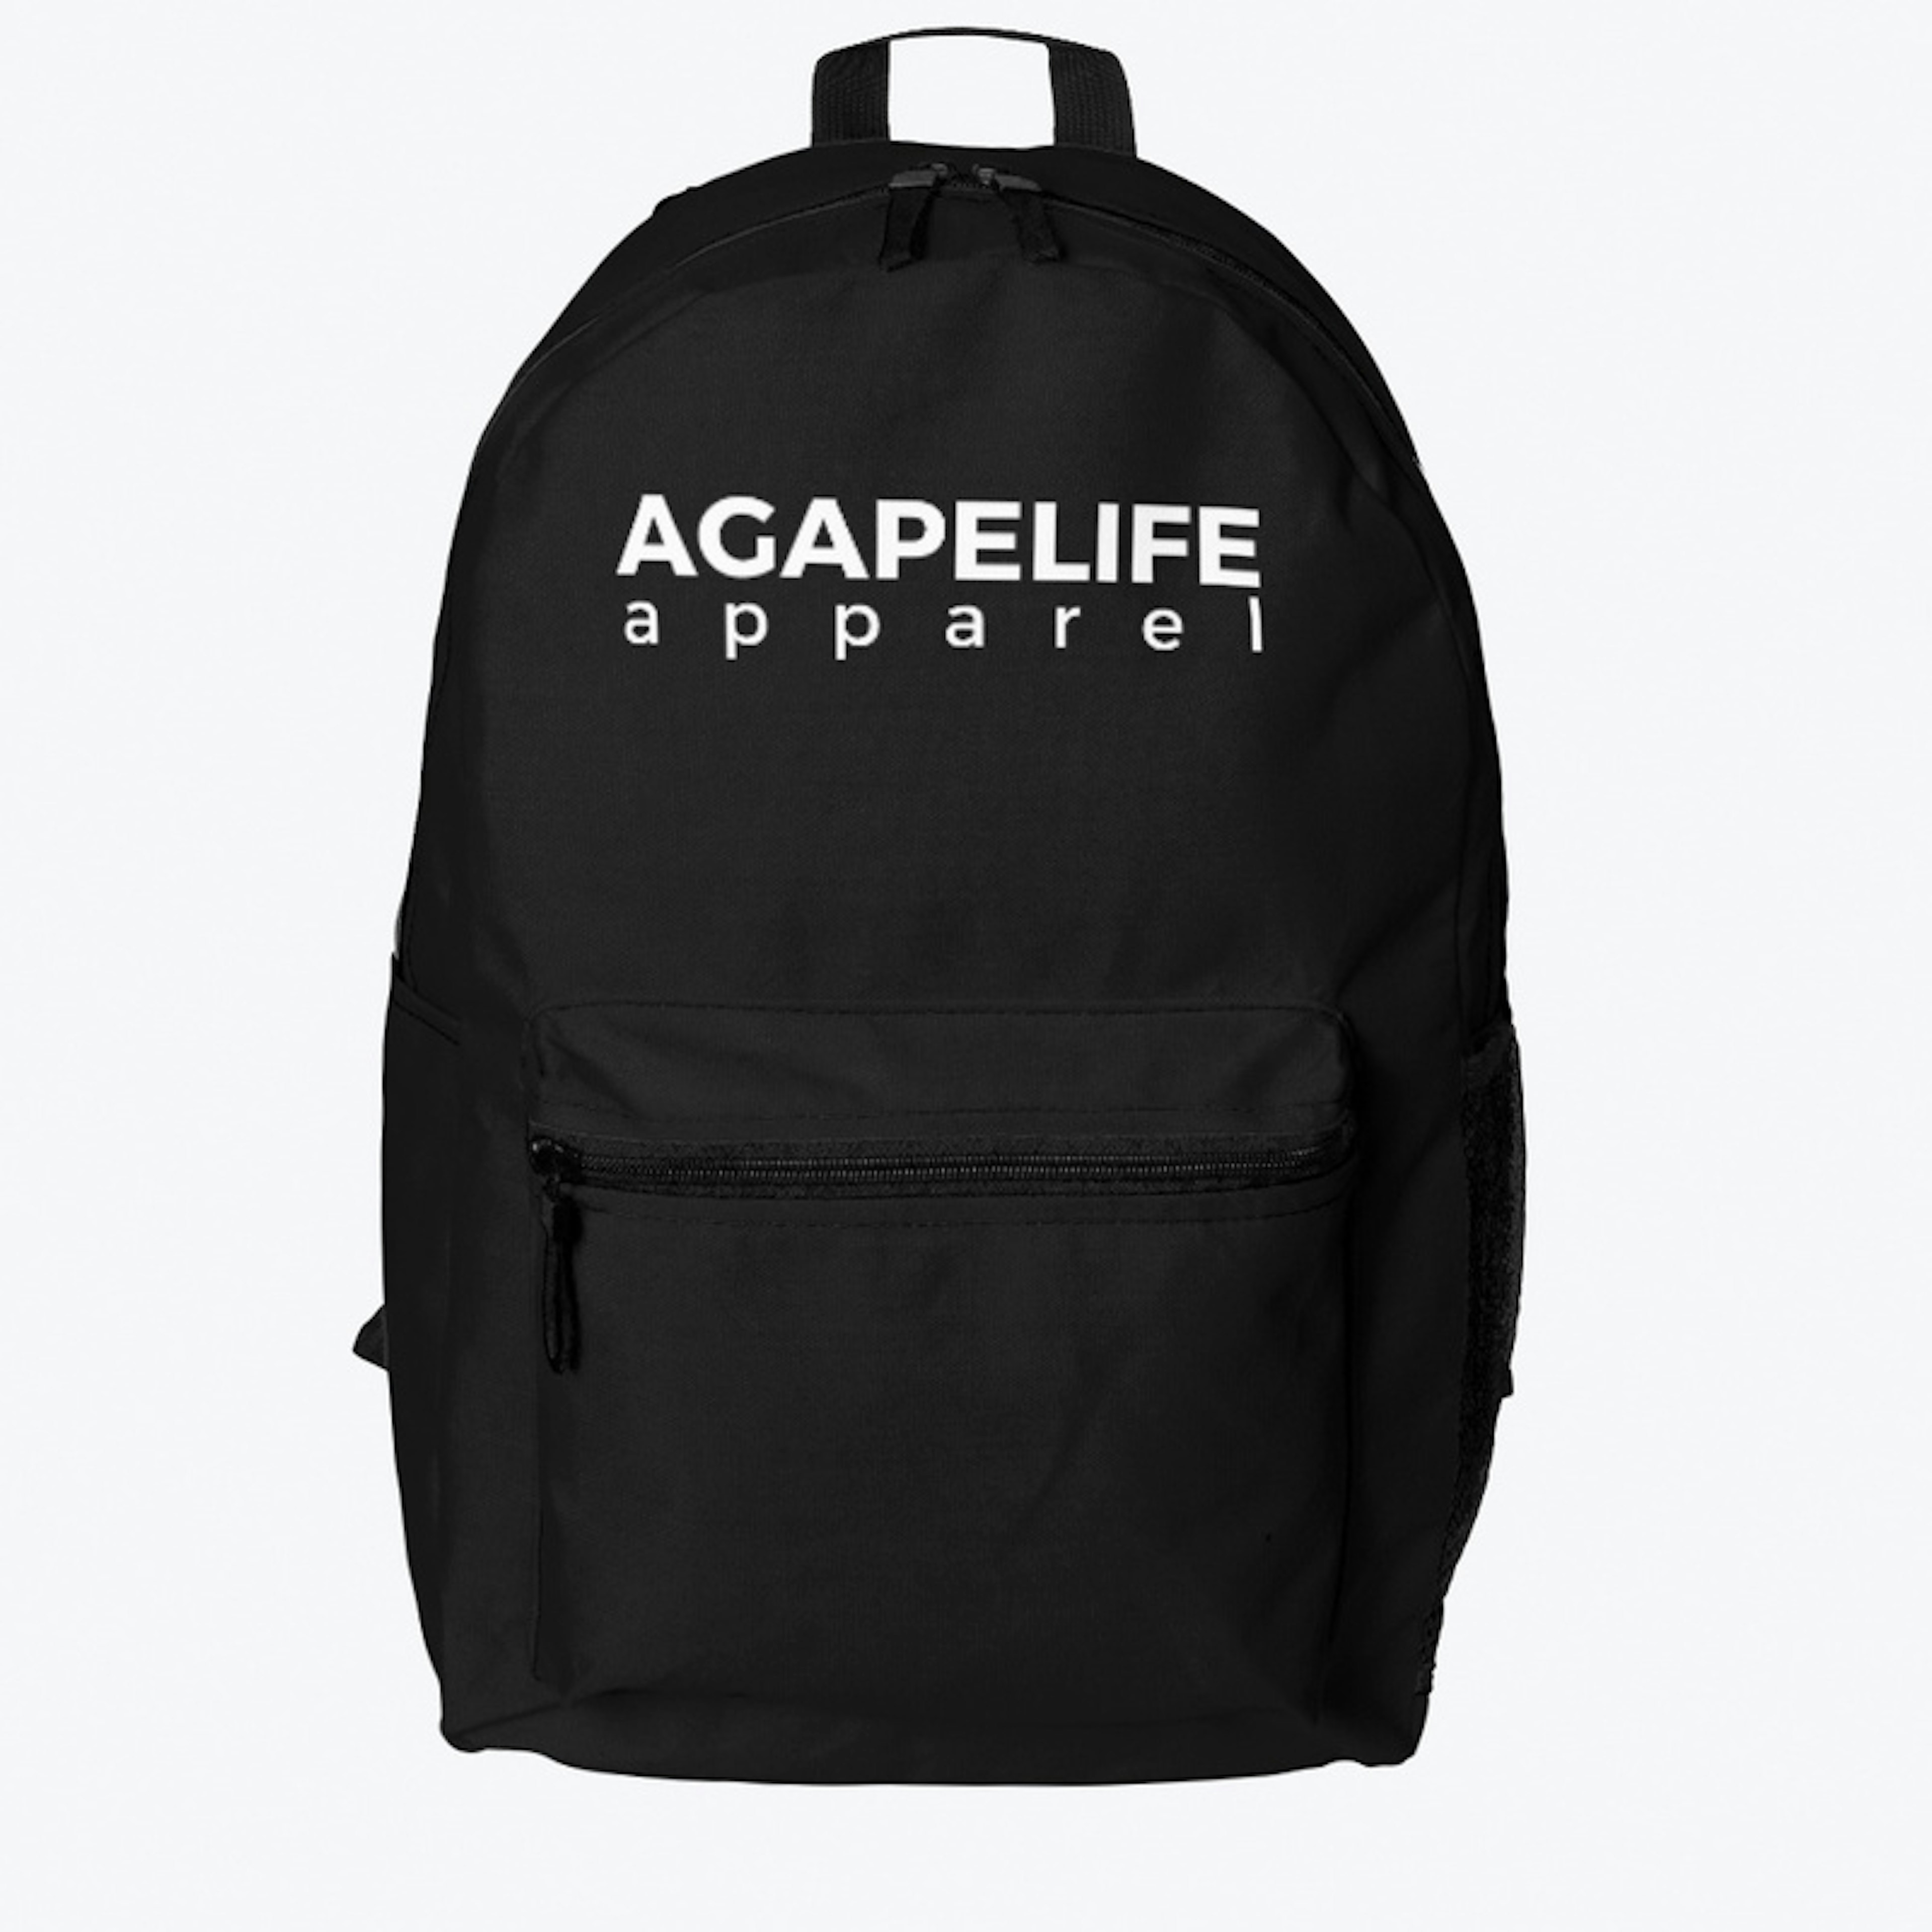 Agapelife Apparel Backpack 